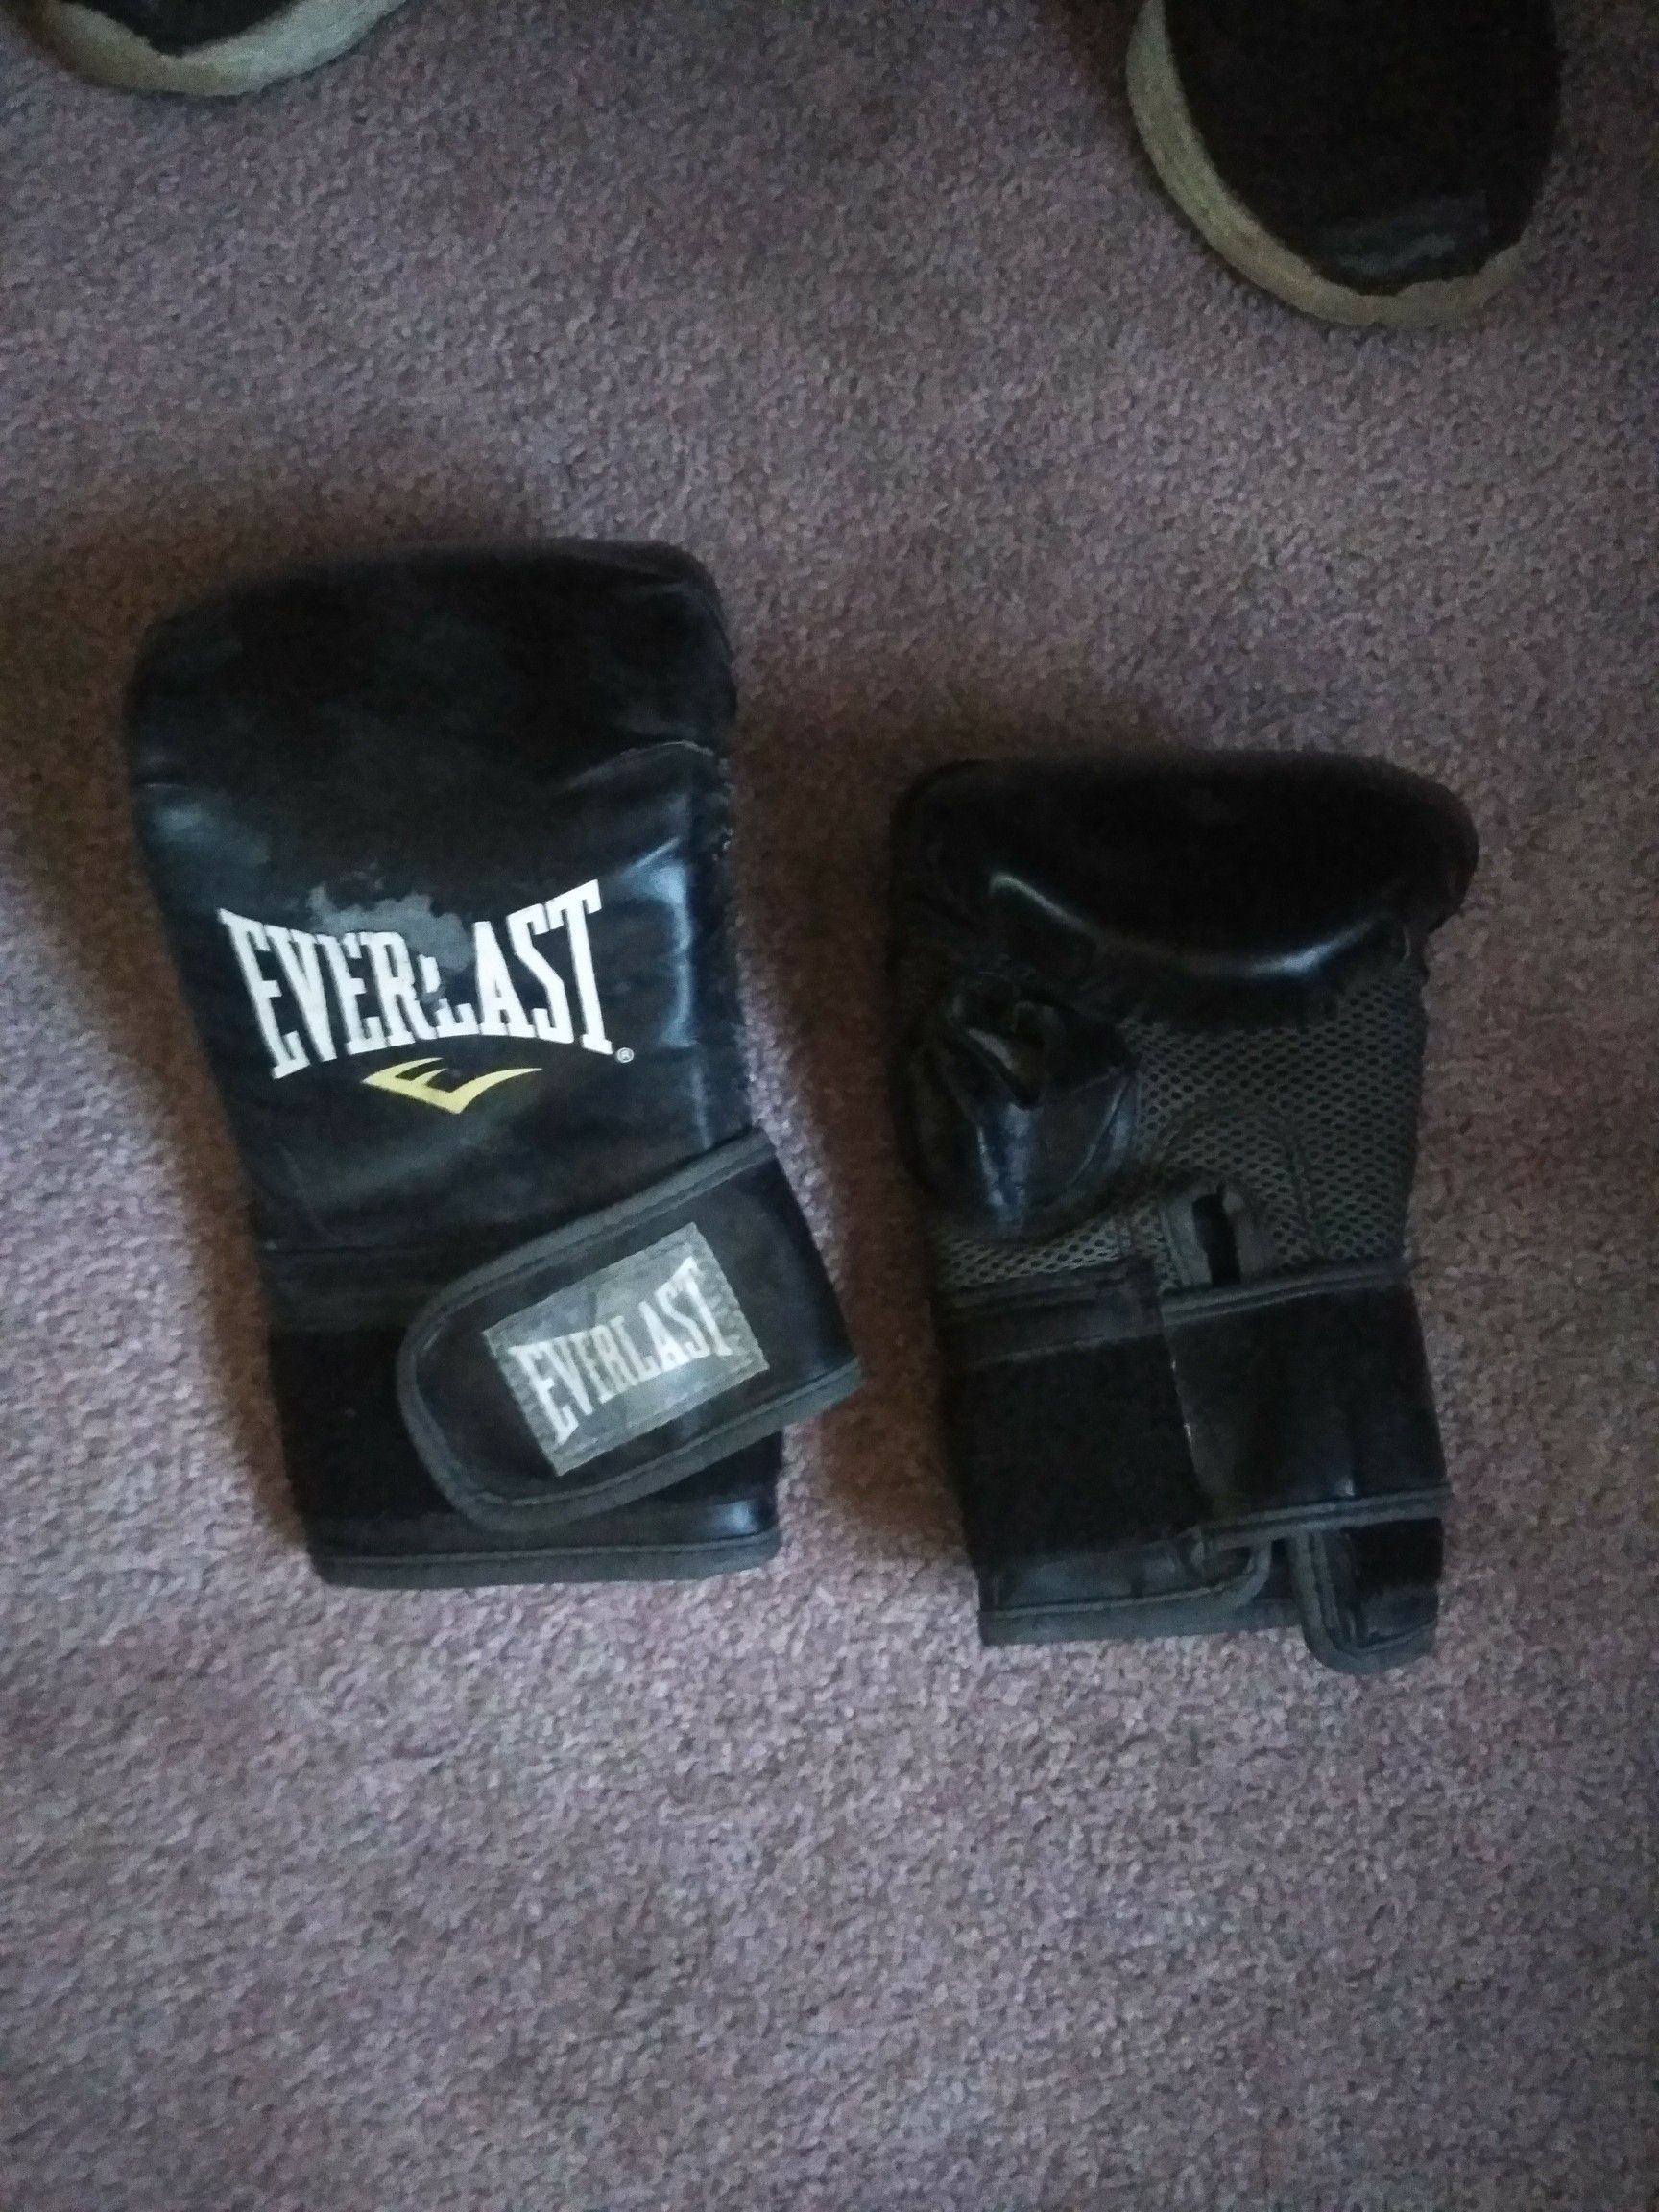 Everlast workout gloves